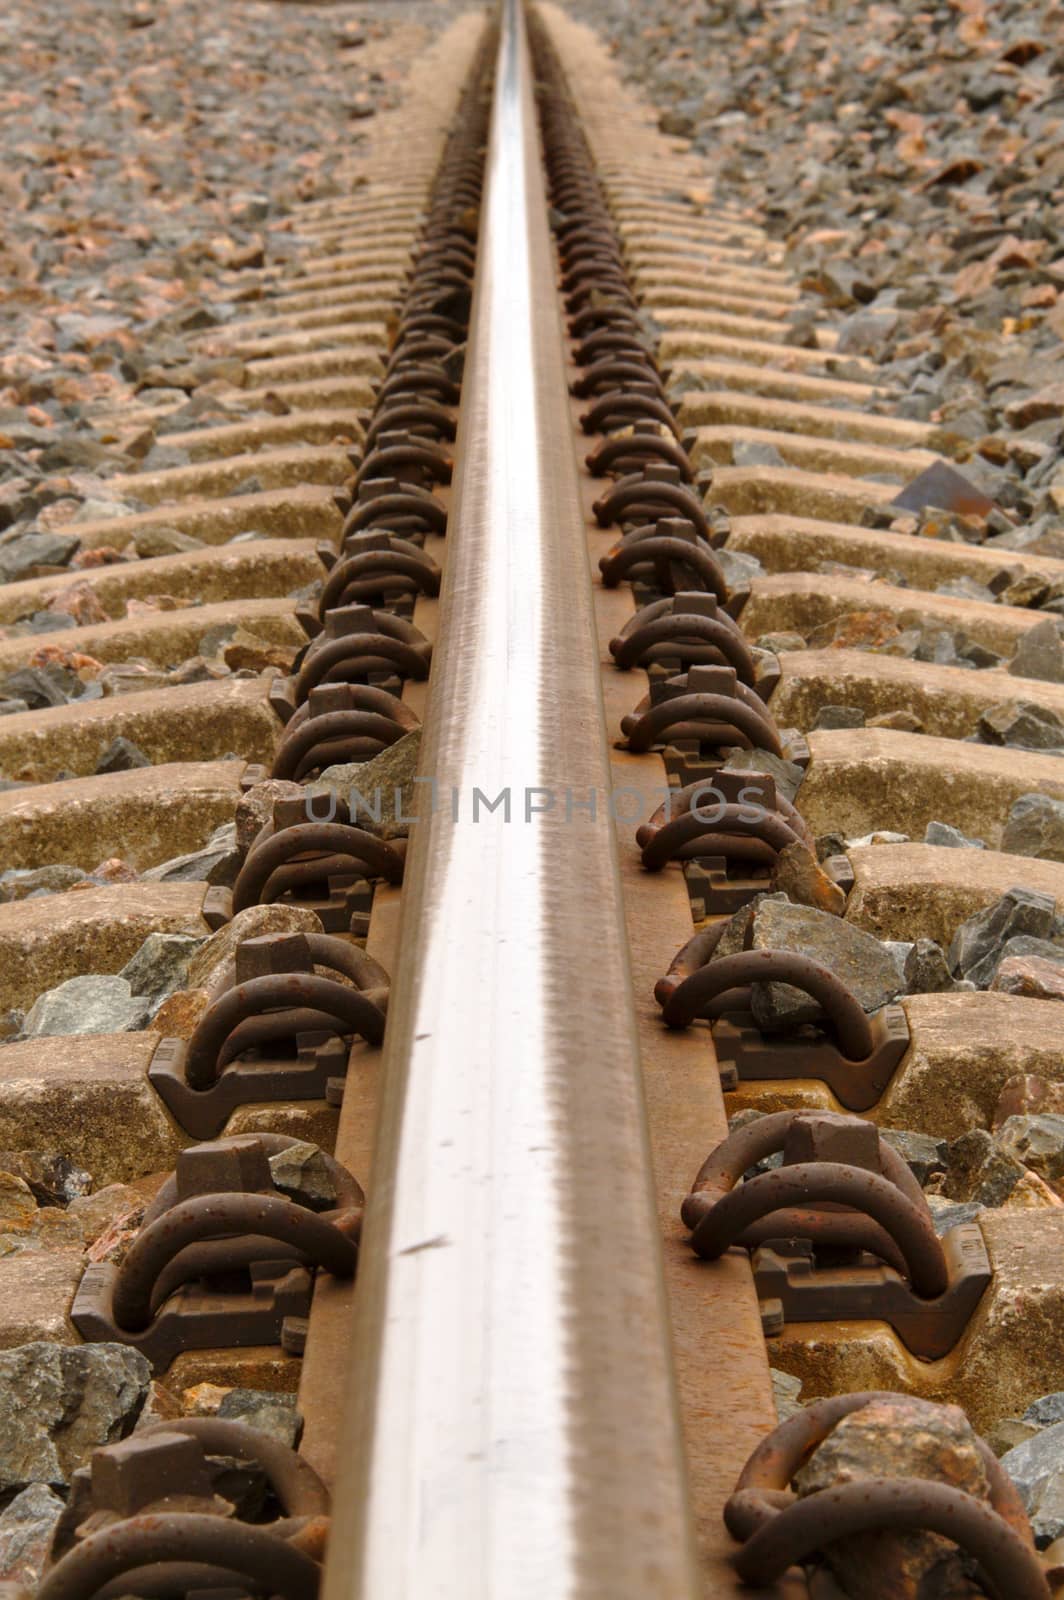 One rail of the railroad tracks.